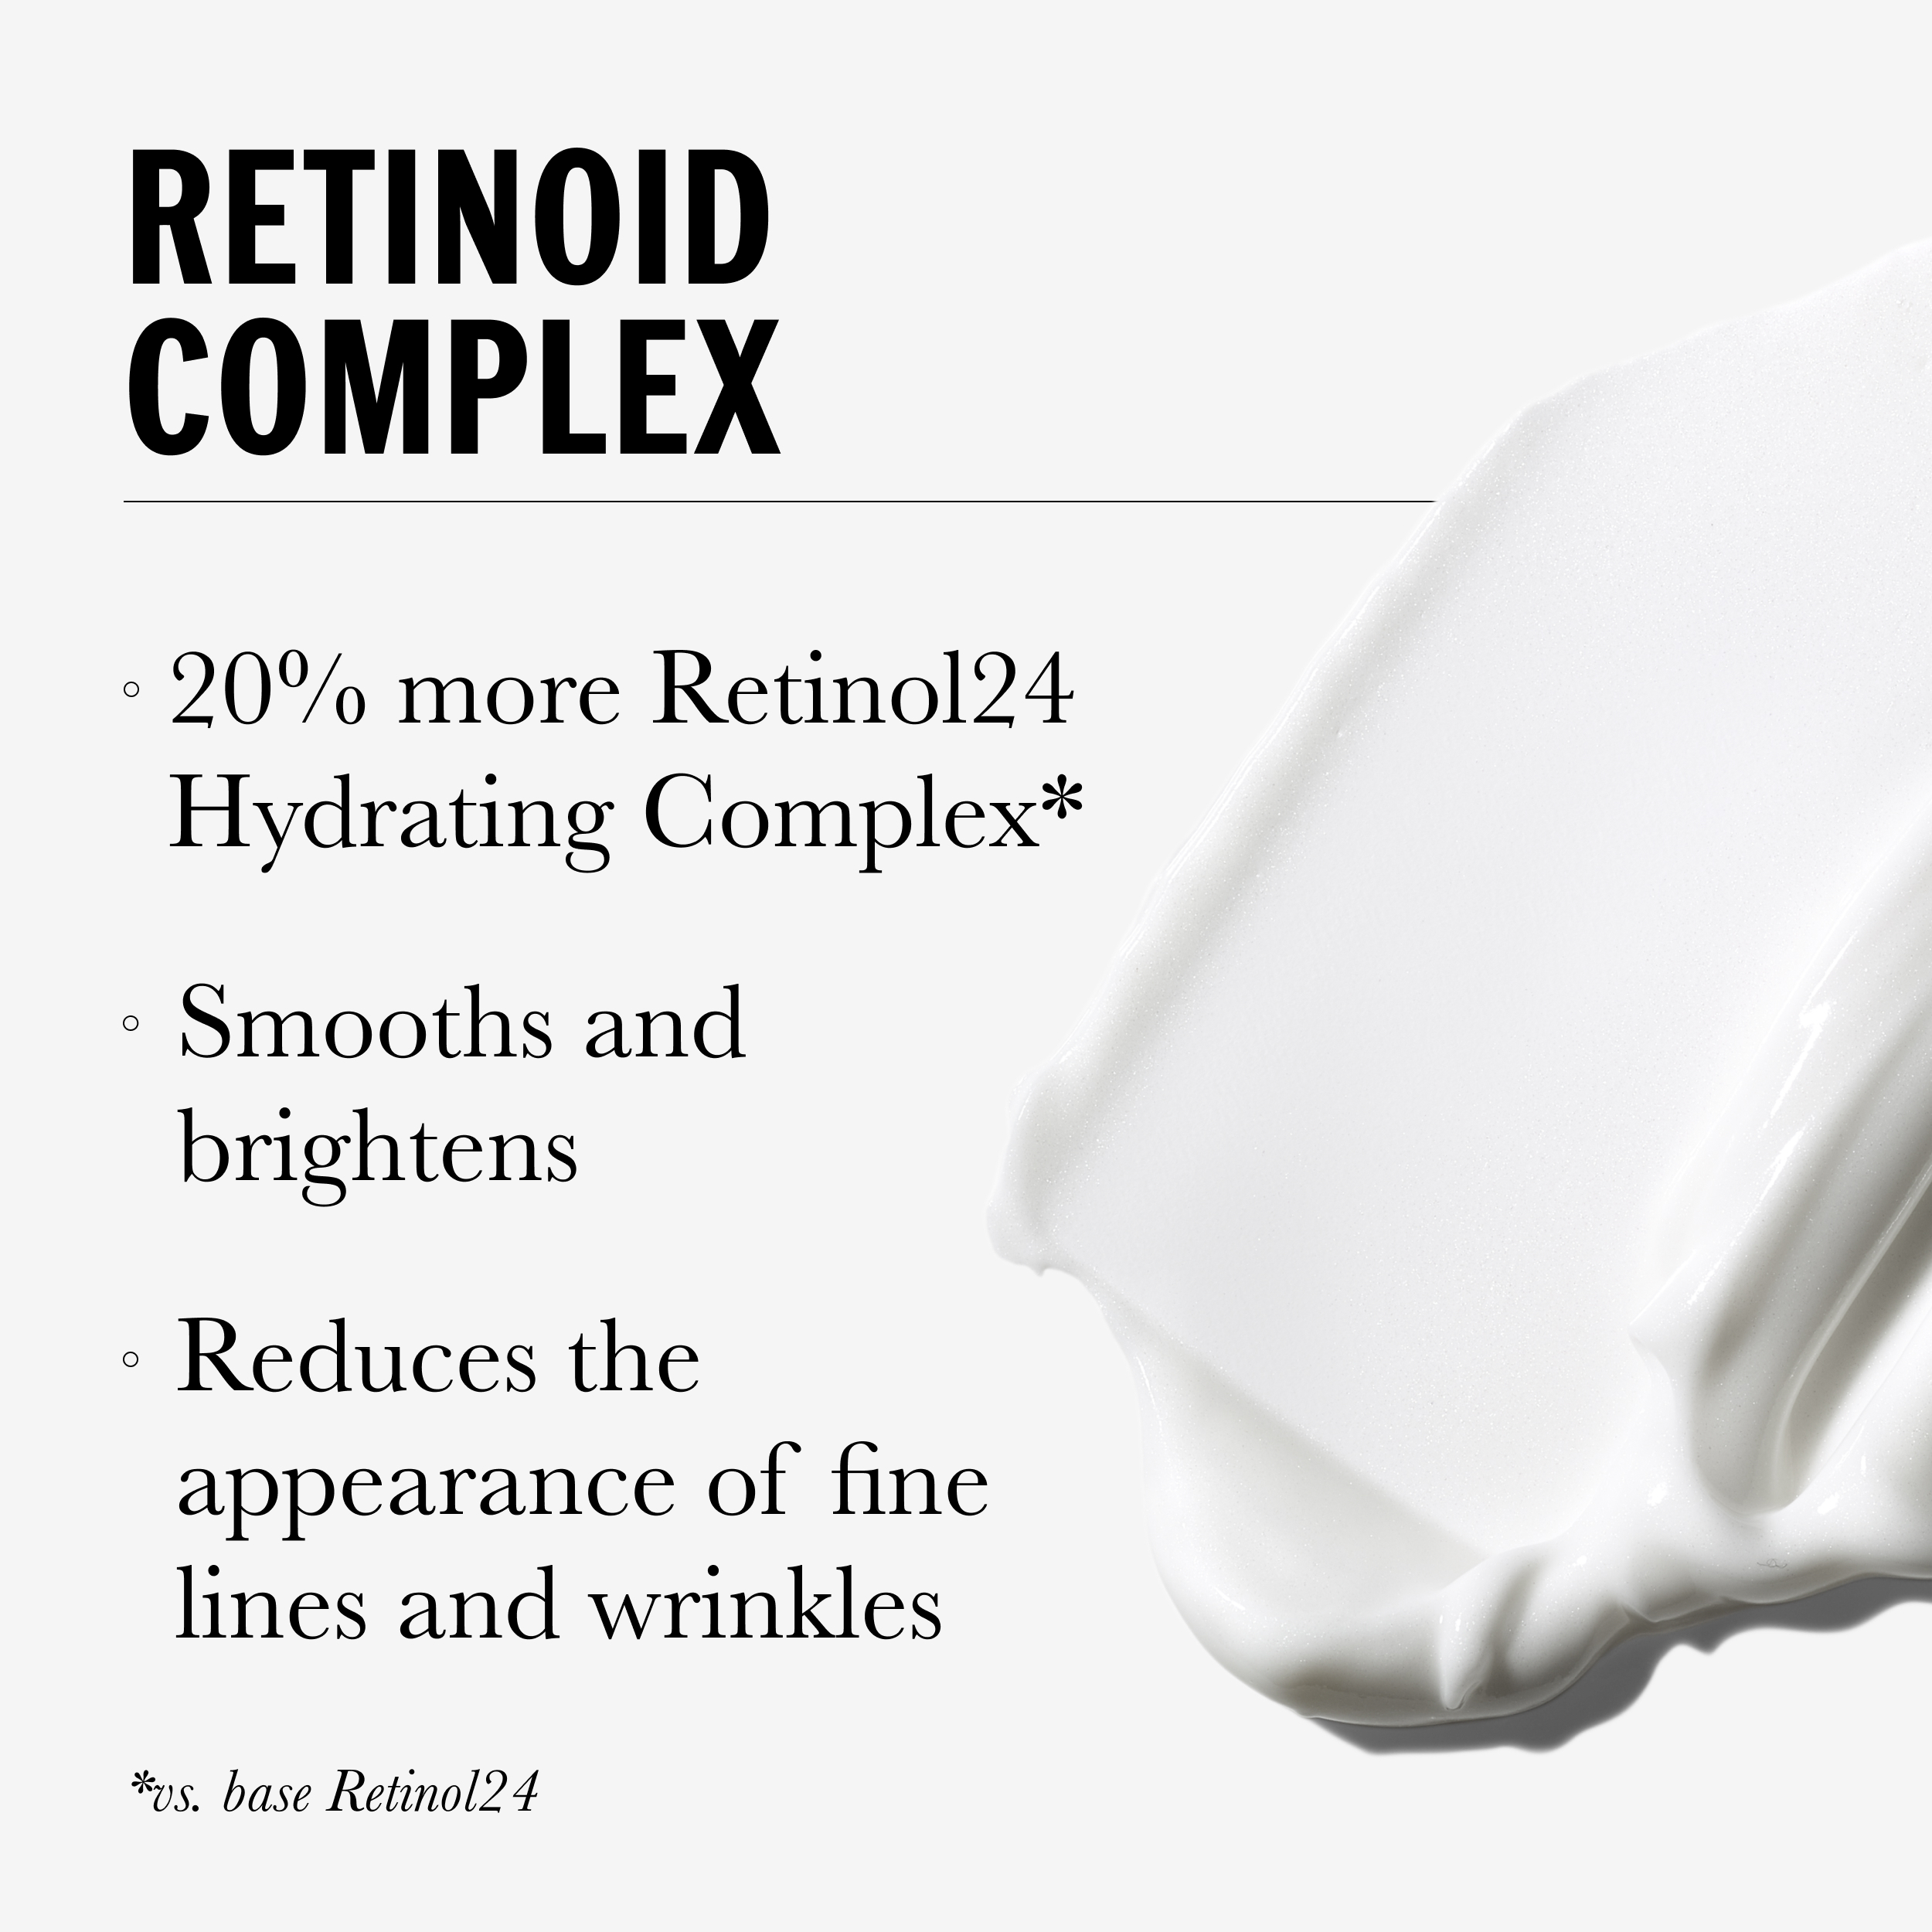 Olay Skincare Regenerist Retinol 24 MAX Night Face Moisturizer, Anti-Aging Cream, 1.7 oz Jar - image 4 of 14